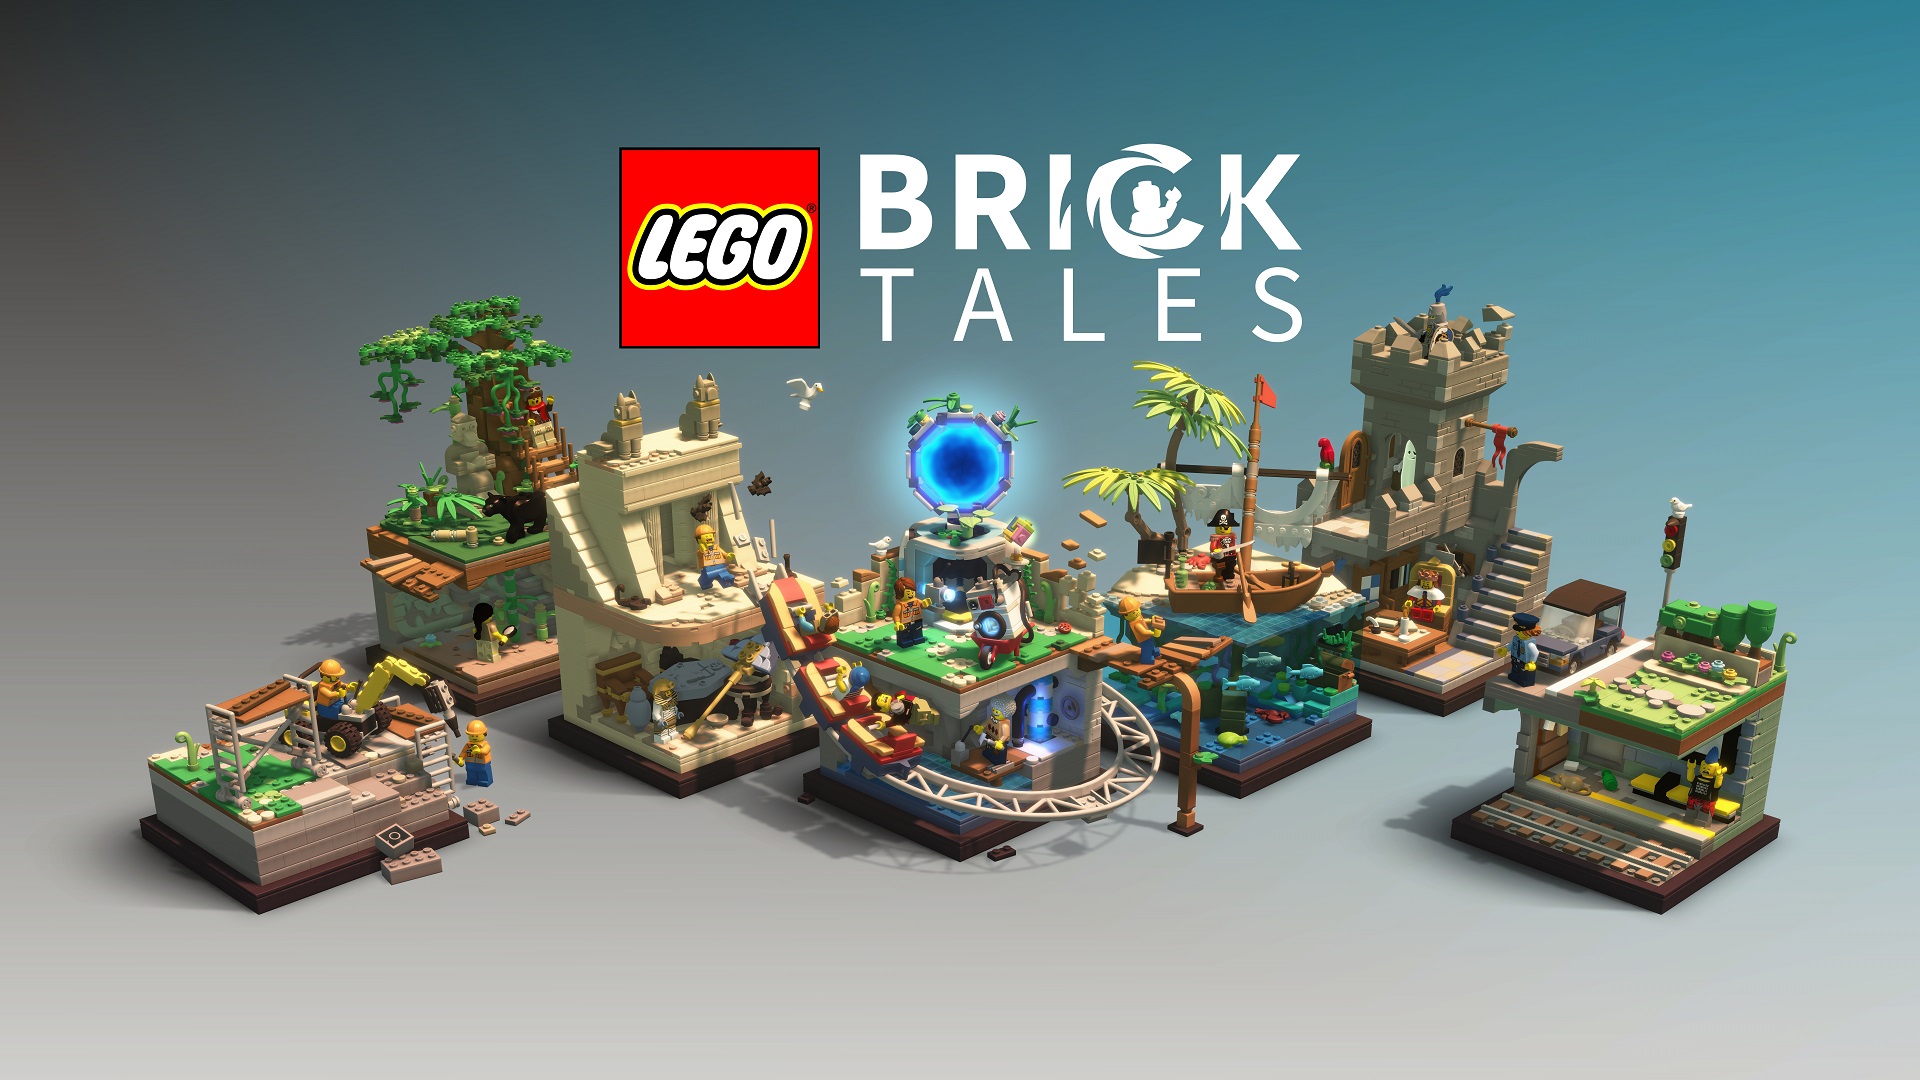 LEGO Bricktales digital adventure game announced